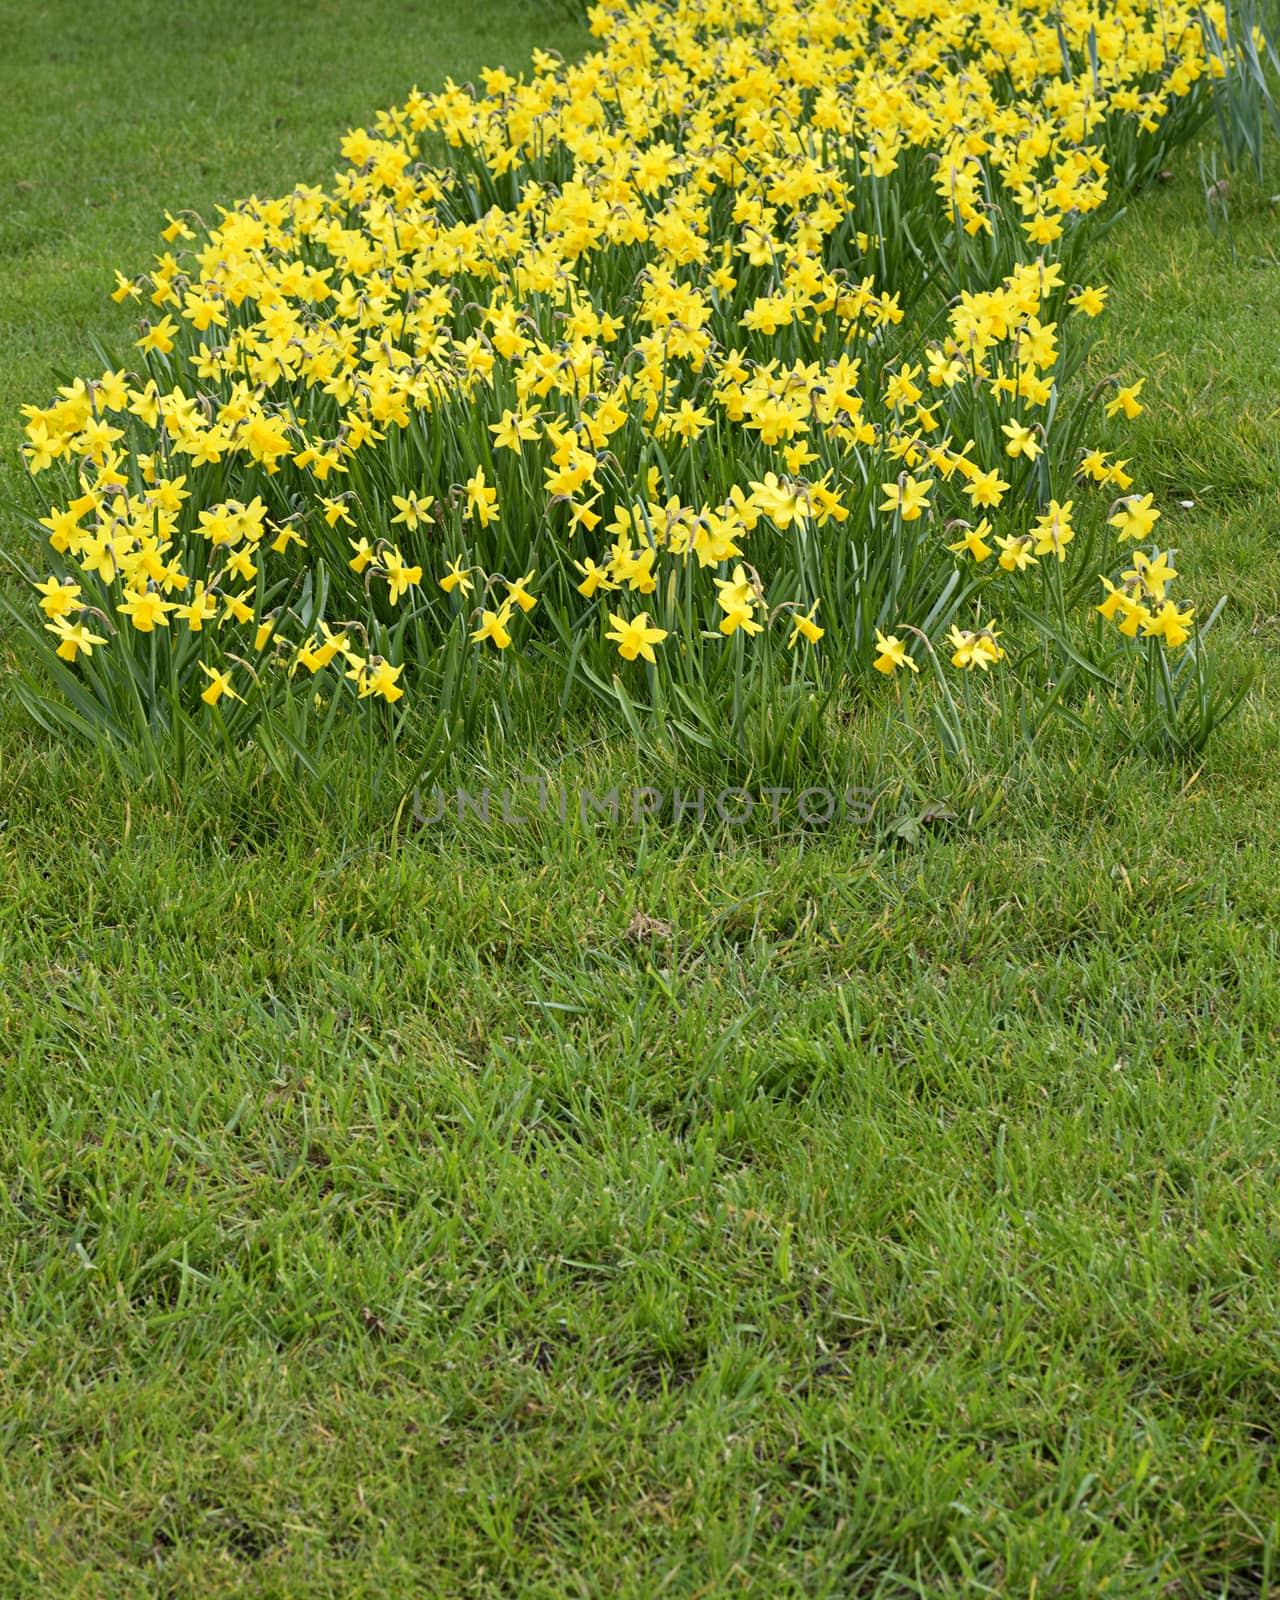 Daffodils on grass